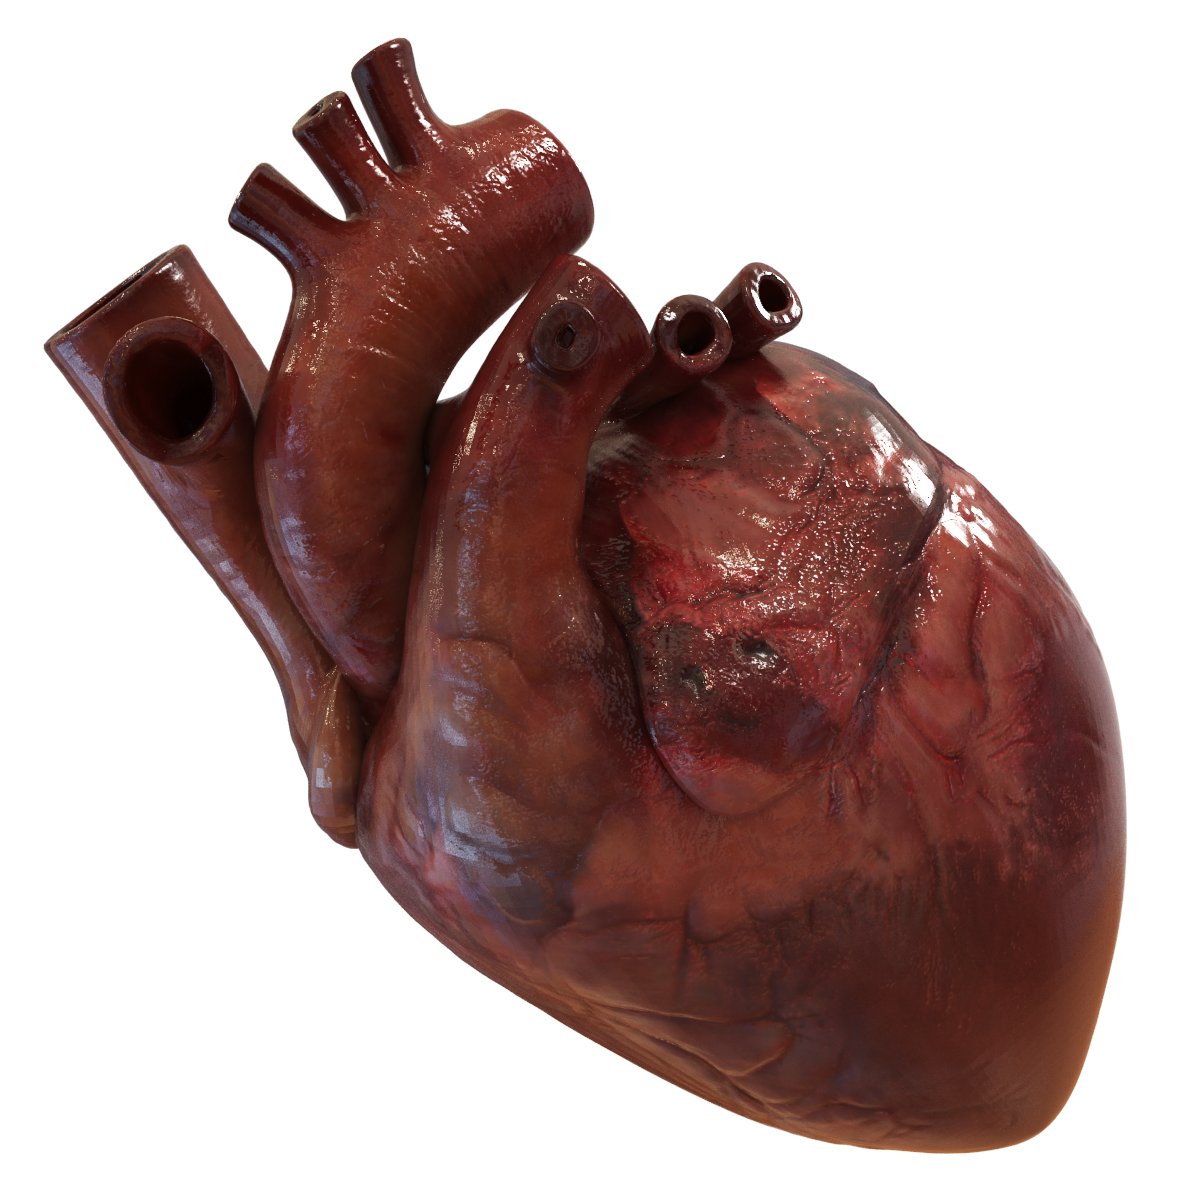 Сердц. Муляж сердца человека. Макет сердца человека.